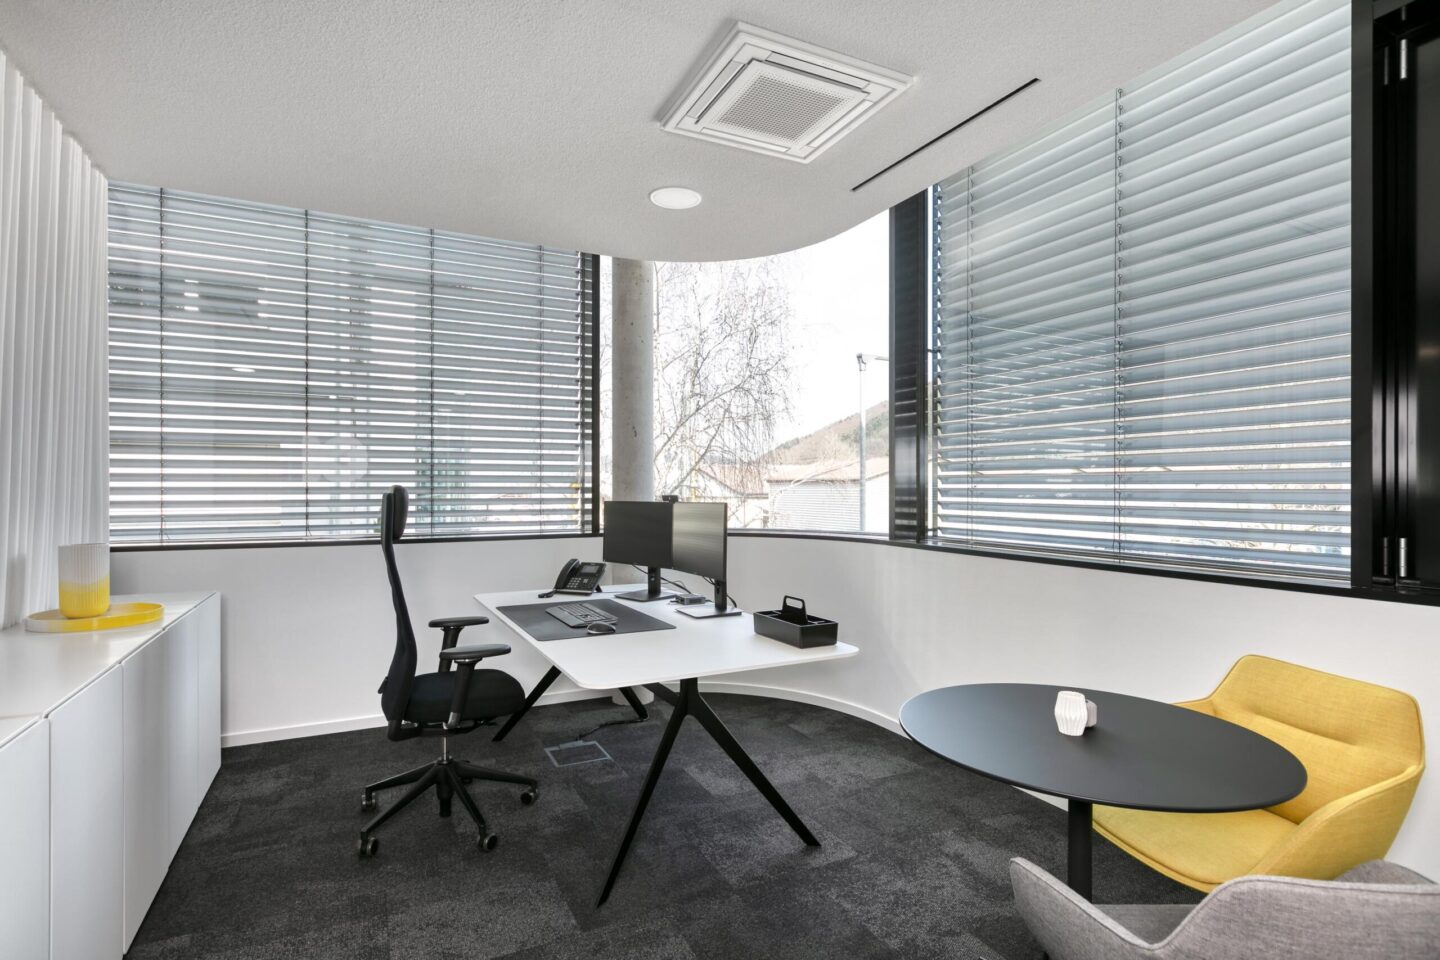 Hoch Baumaschinen │ exclusive office furniture │ meeting room